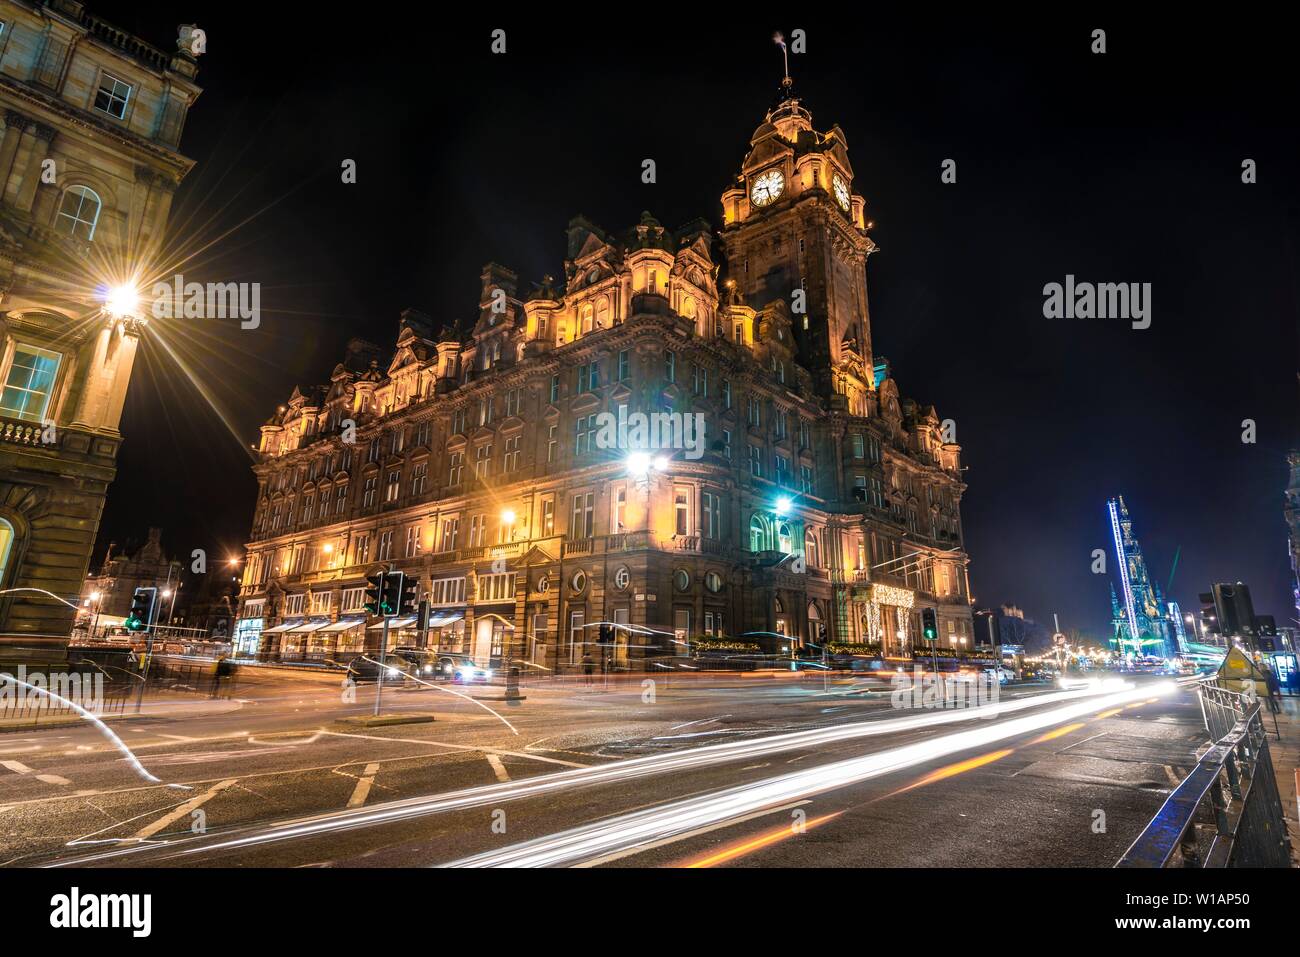 The Balmoral Hotel, historic old town at night Edinburgh, Scotland, Great Britain Stock Photo